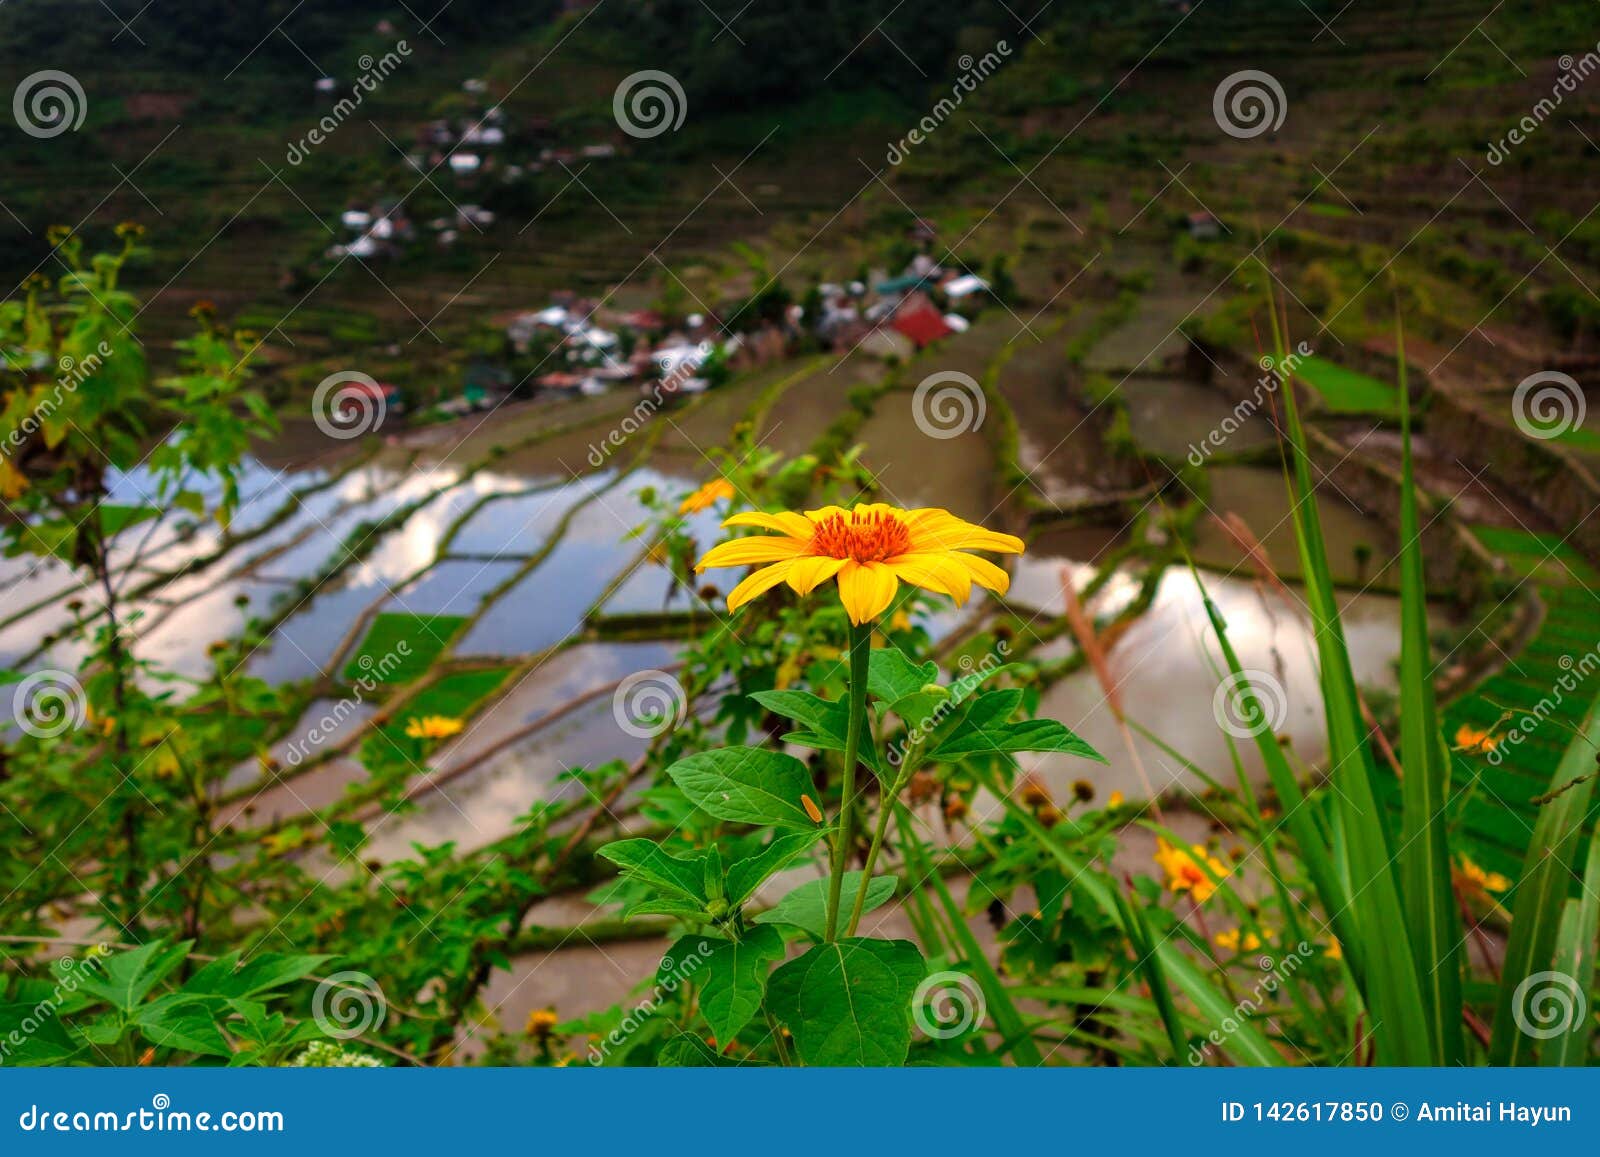 sunflower on rice terrace